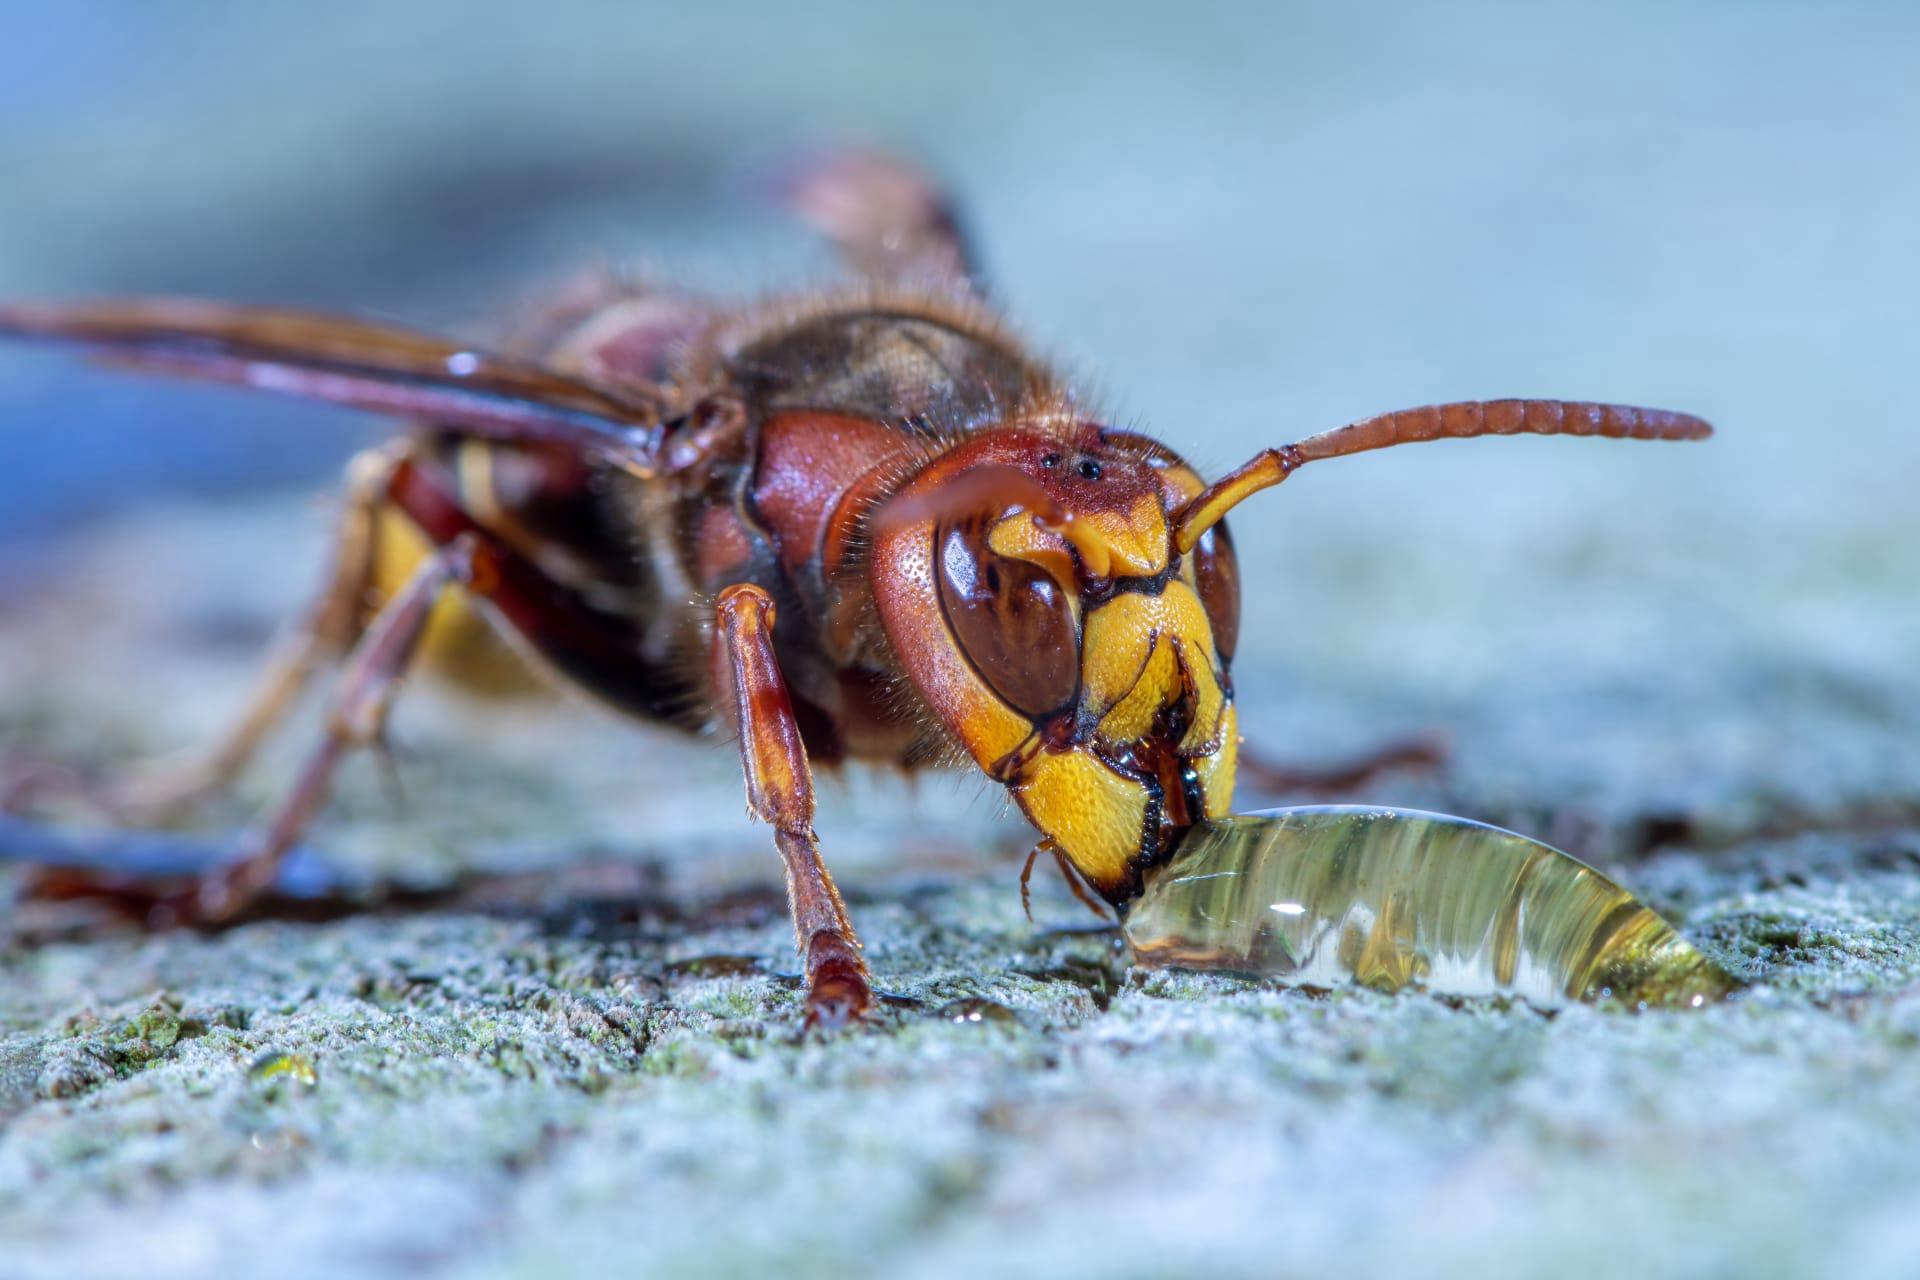 European hornet pictures